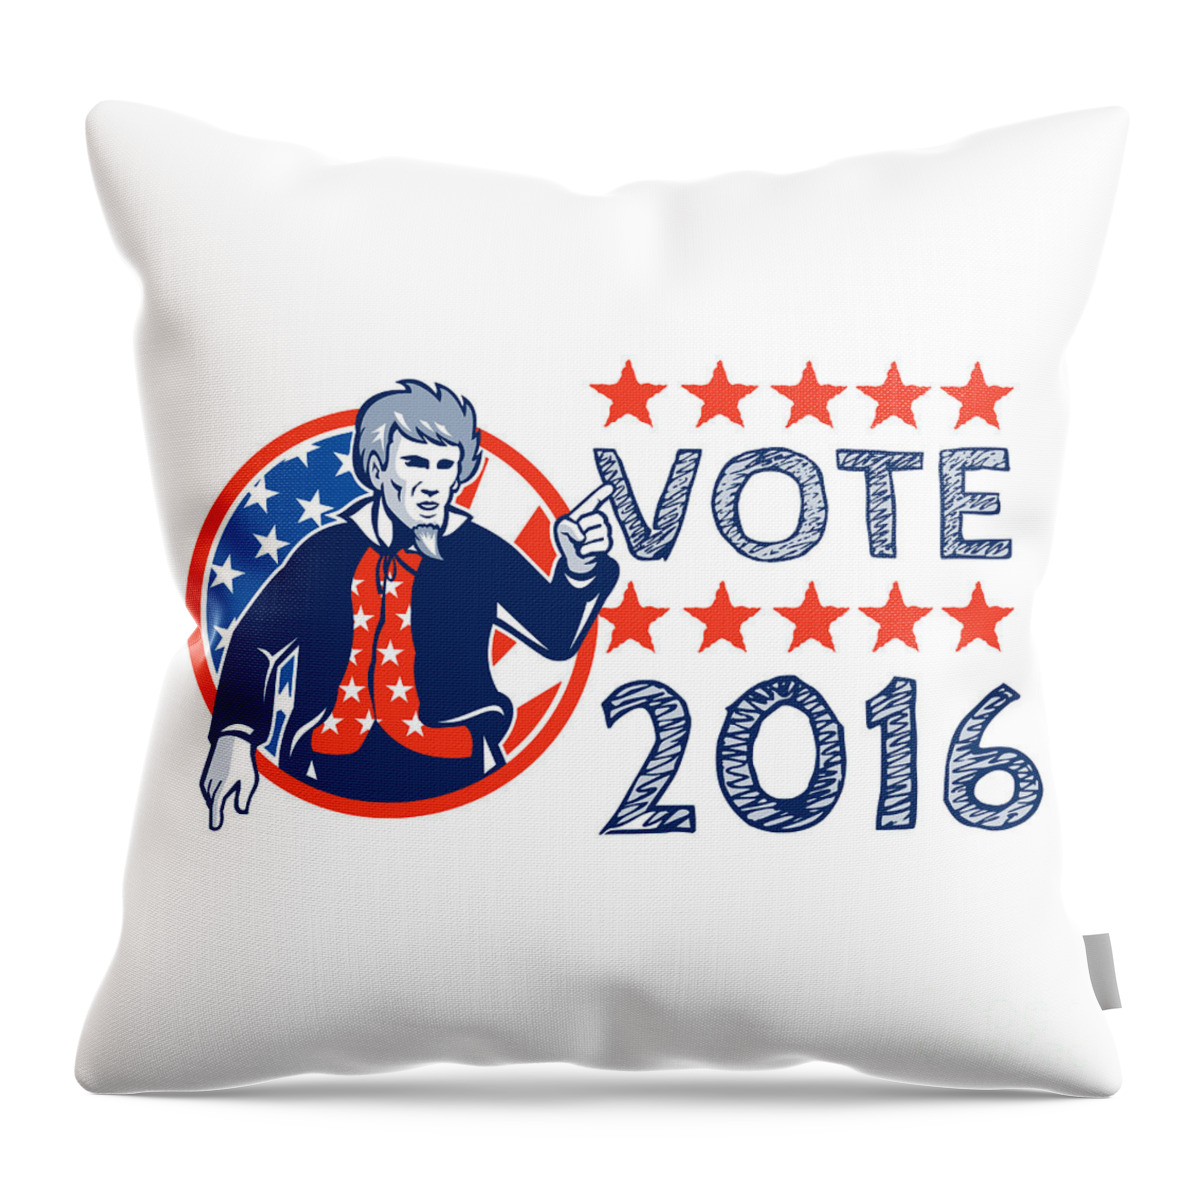 Vote 2016 Throw Pillow featuring the digital art Vote 2016 Uncle Sam Pointing Circle Retro by Aloysius Patrimonio